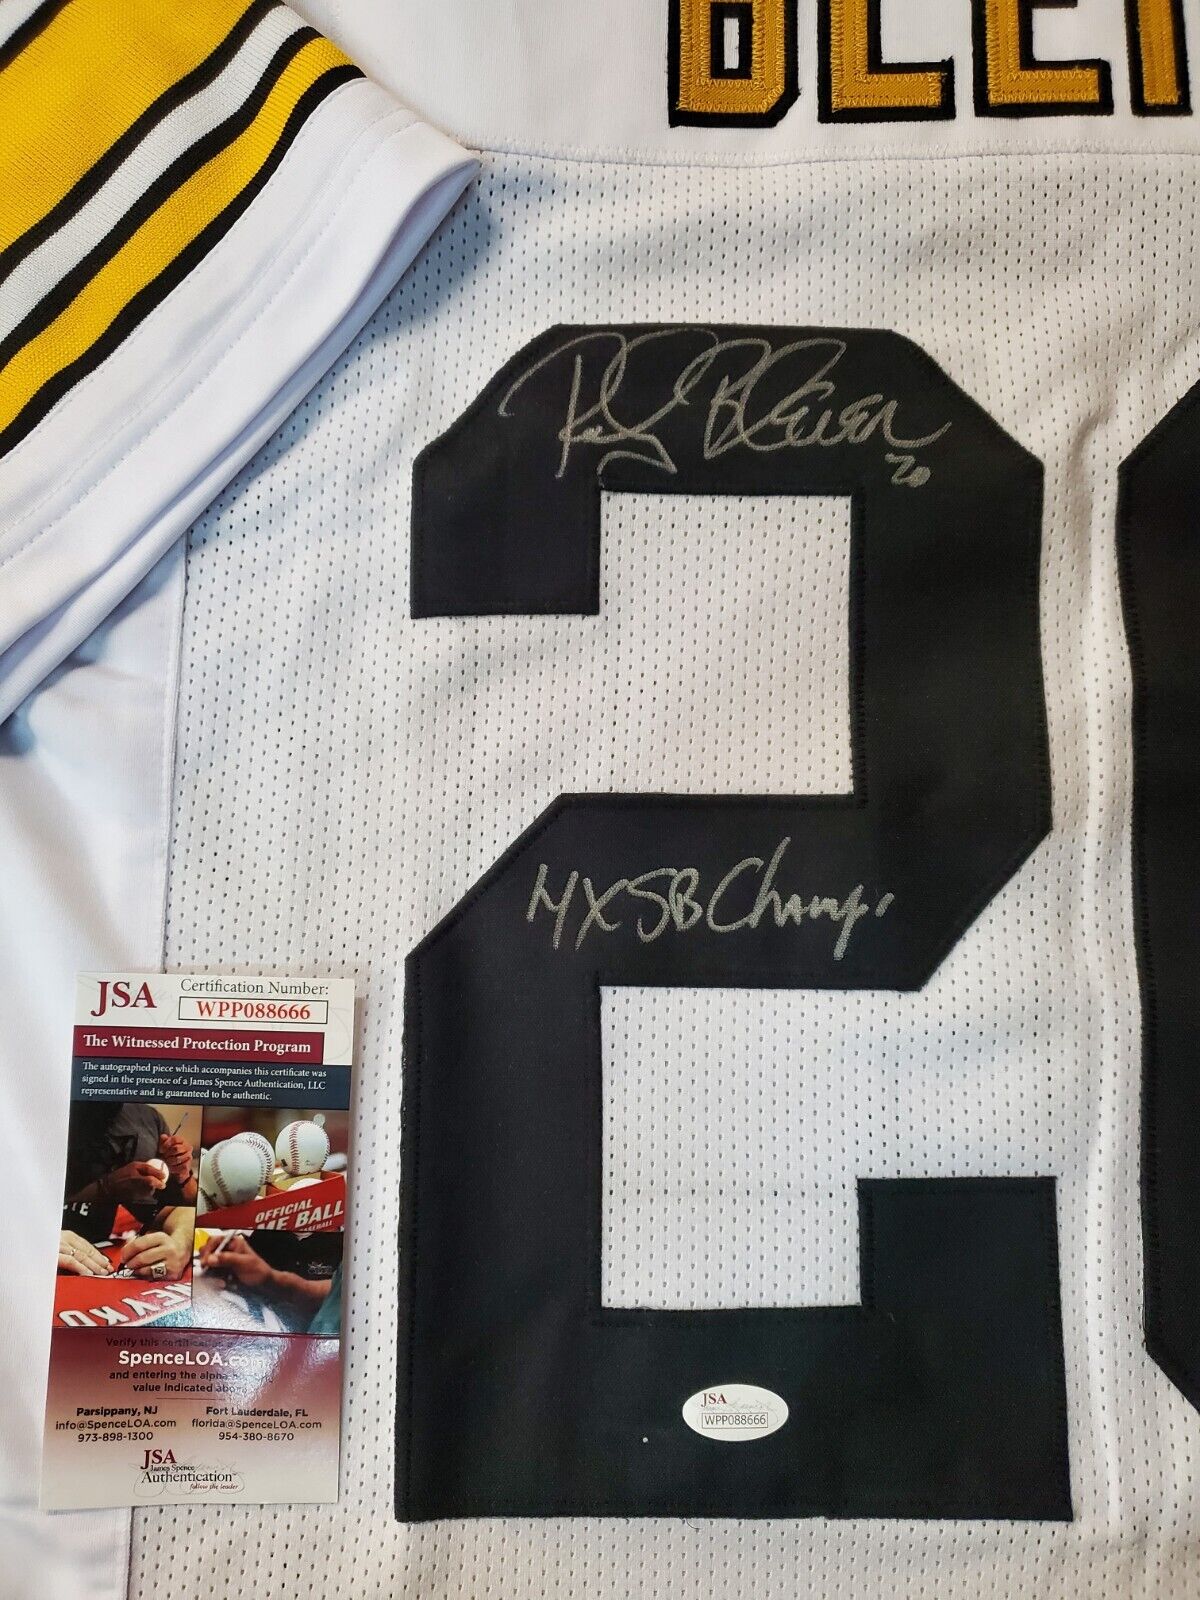 Rocky Bleier Pittsburgh Steelers Jersey black – Classic Authentics